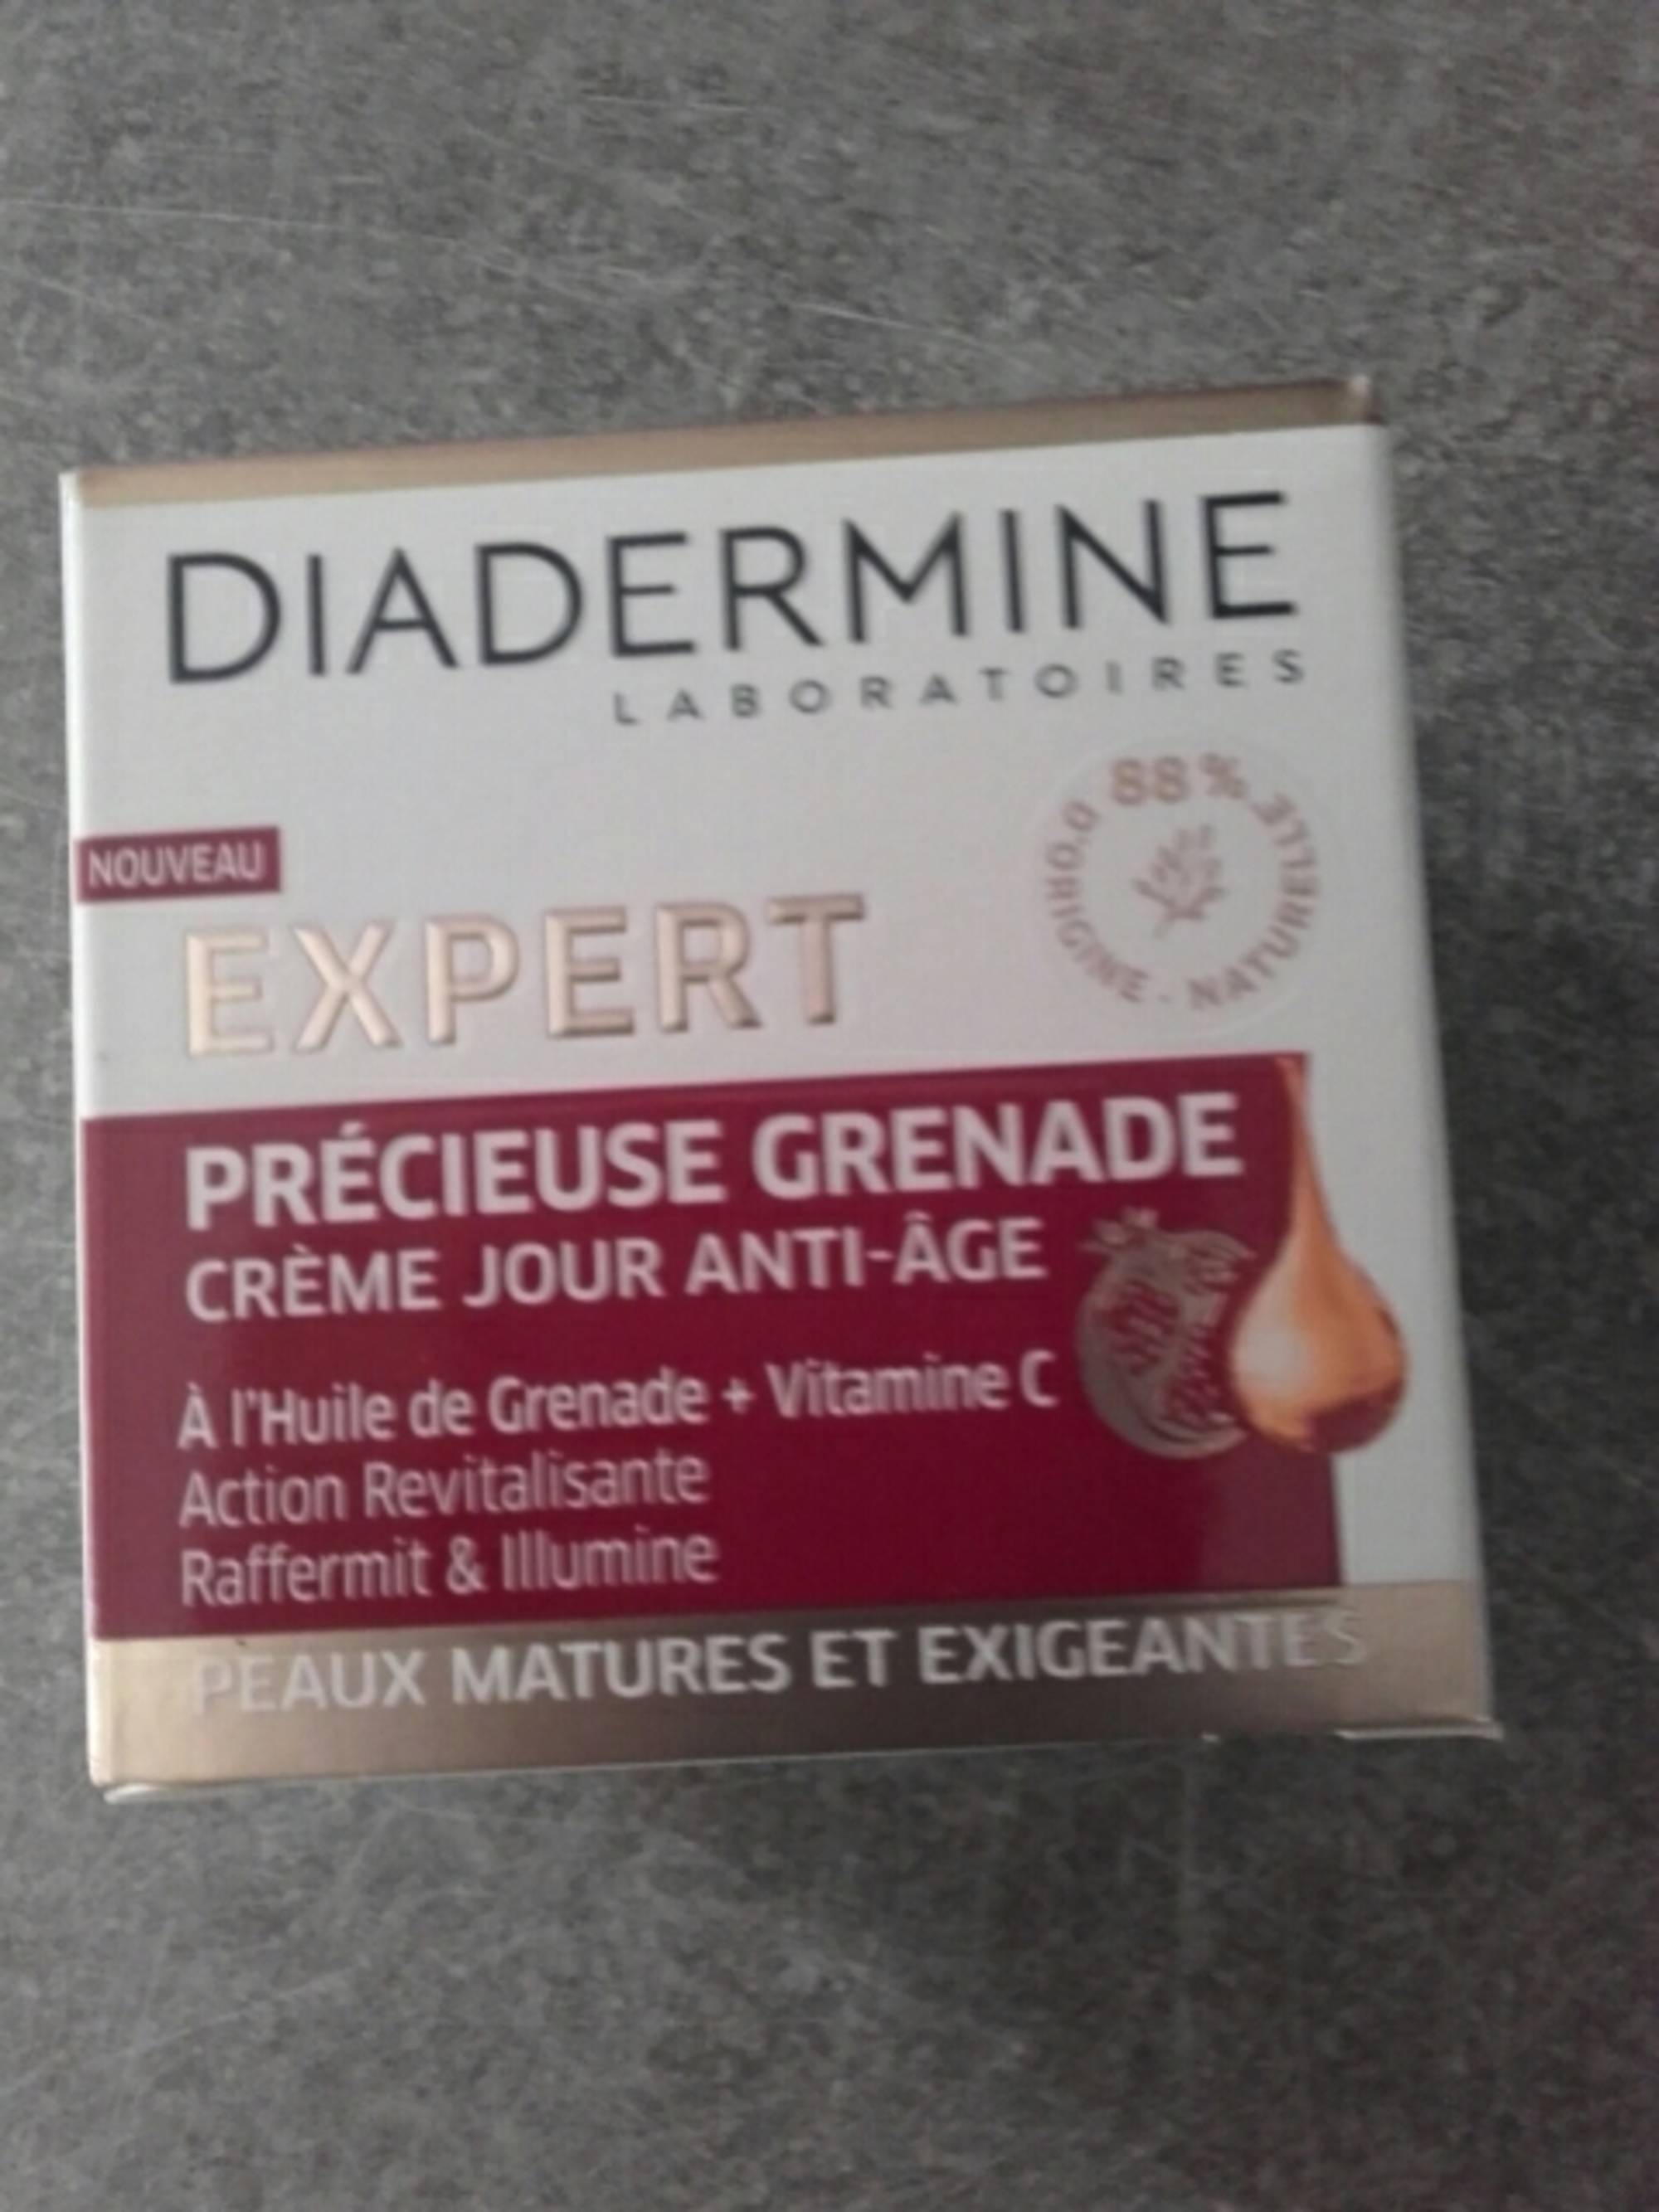 DIADERMINE - Expert Précieuse Grenade - Crème jour anti-âge